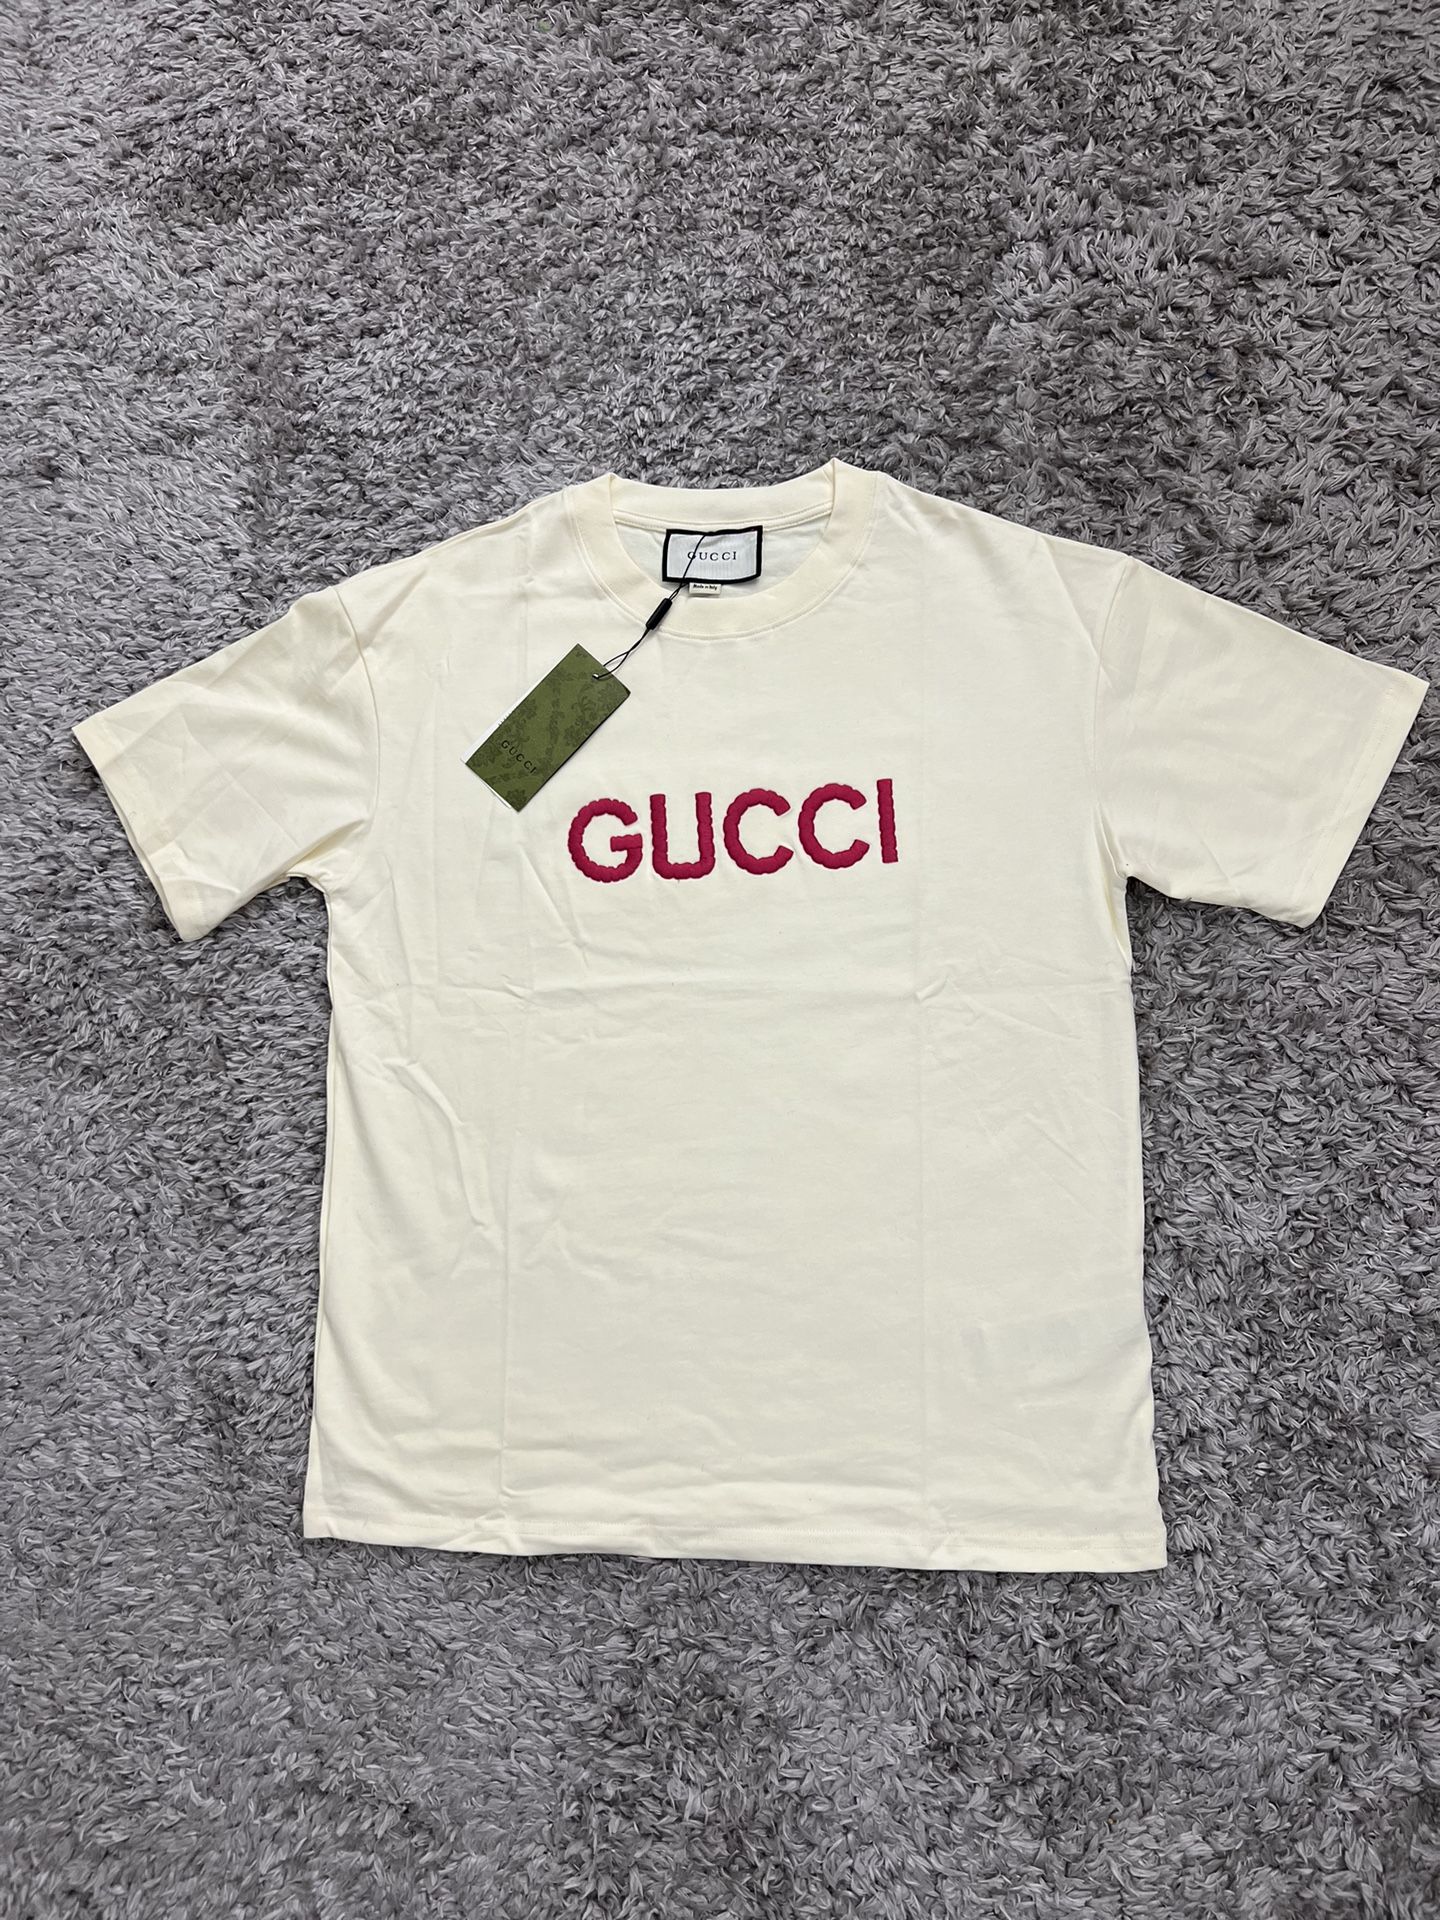 gucci shirt size medium